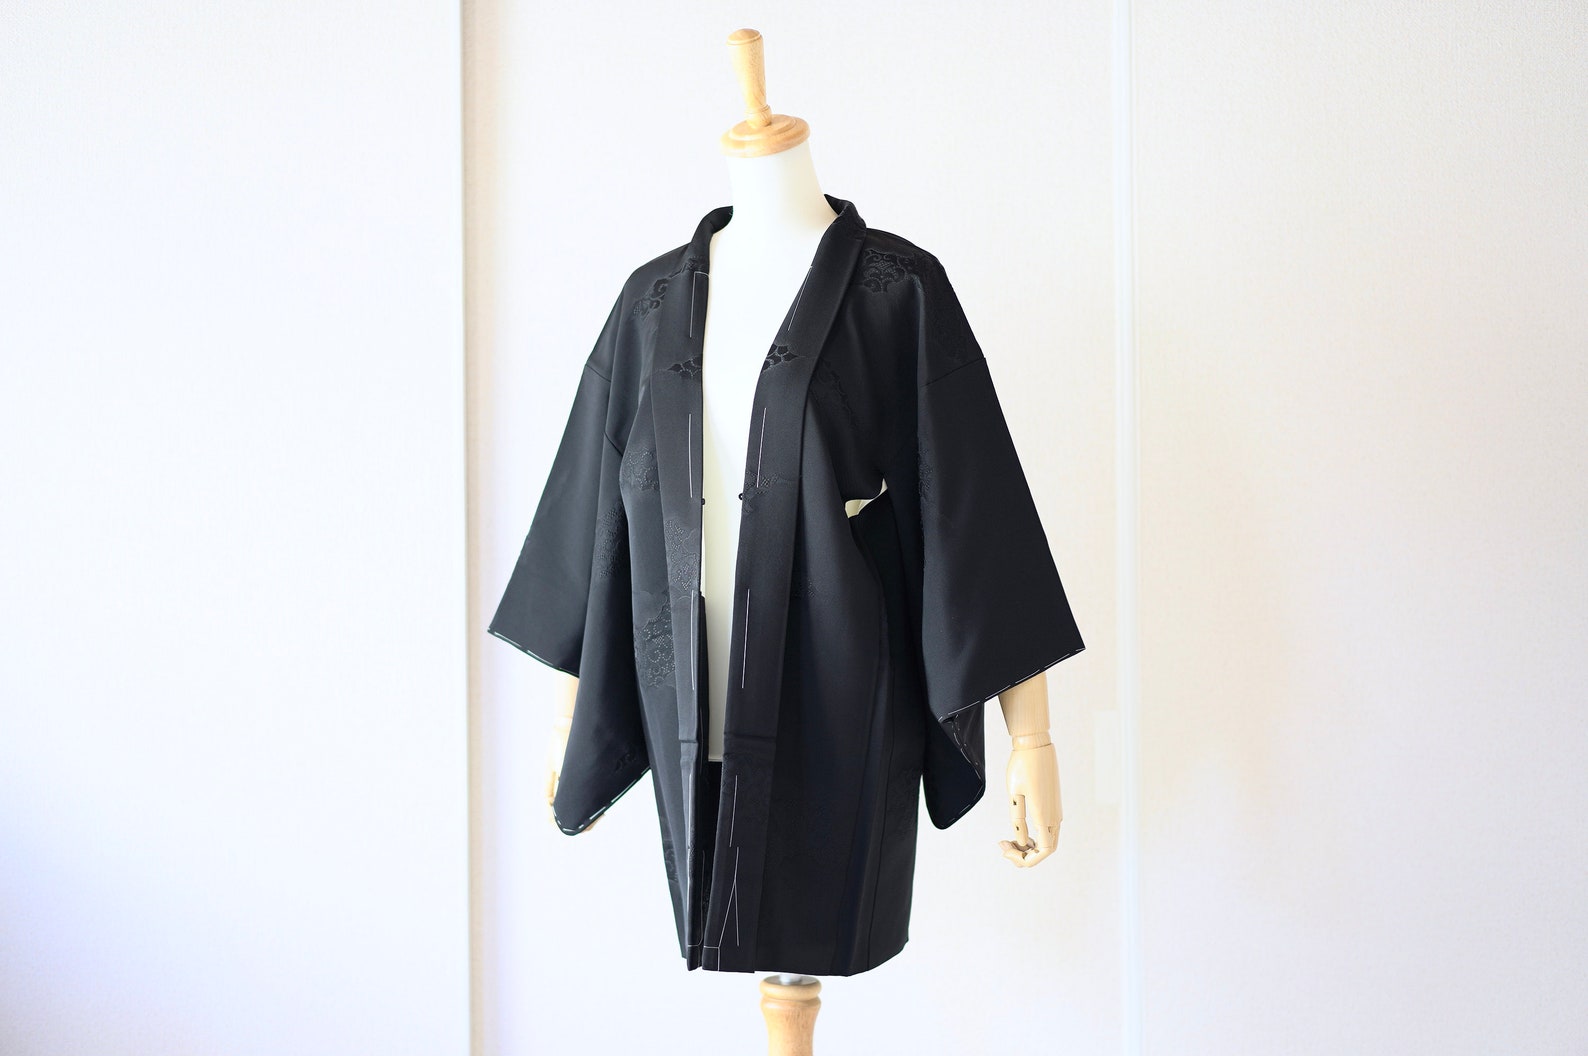 Cloud pattern kimono black haori Japanese silk kimono | Etsy